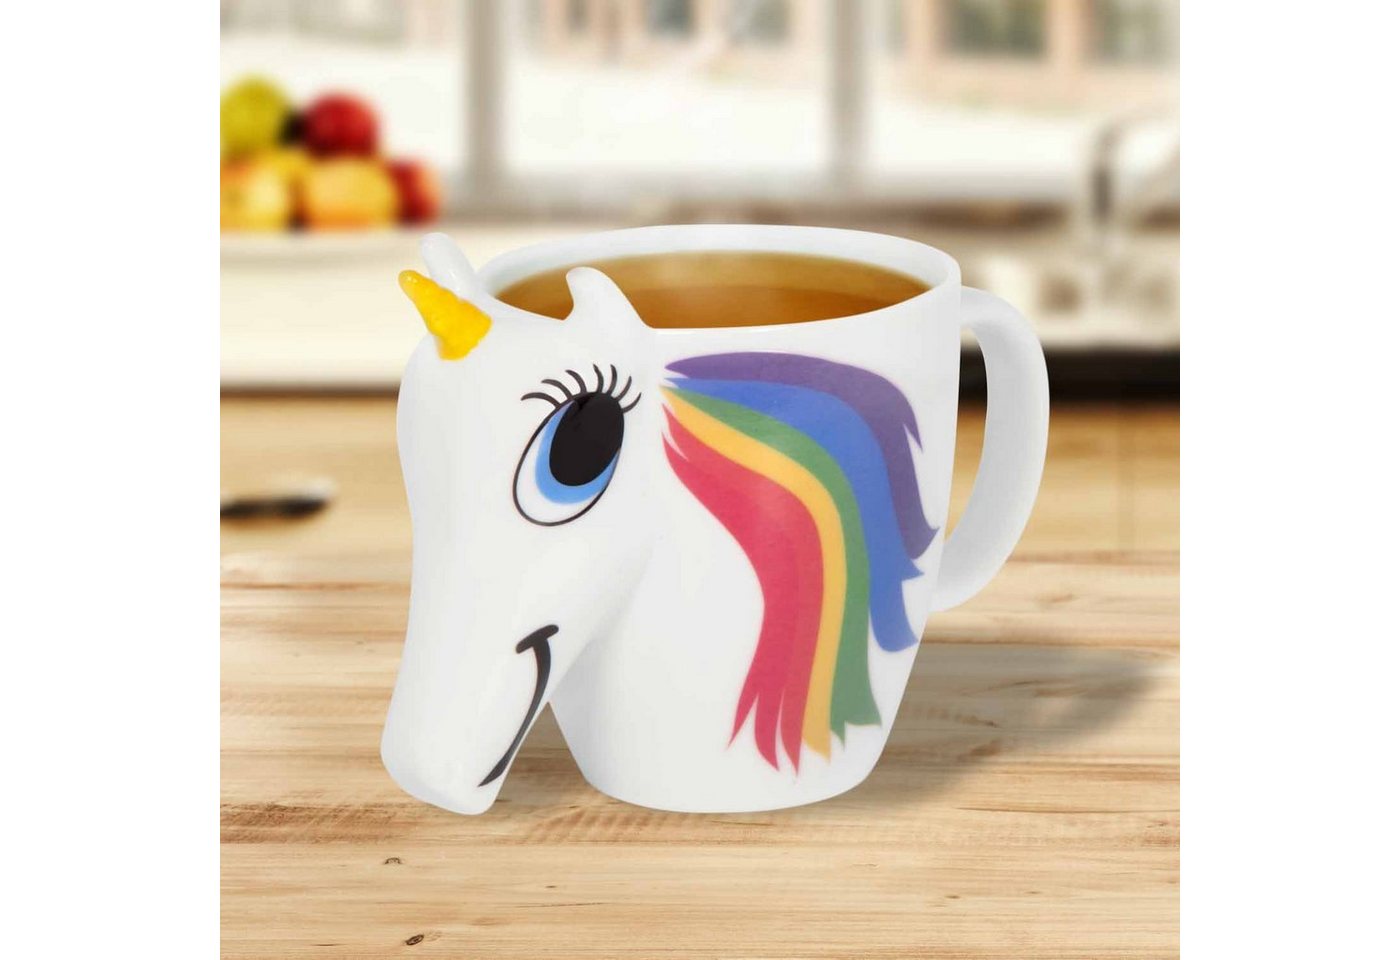 Thumbs Up Tasse Tasse Unicorn Mug" - Einhorn Tasse mit Farbwechsel, Keramik, Farbwechseleffekt" von Thumbs Up